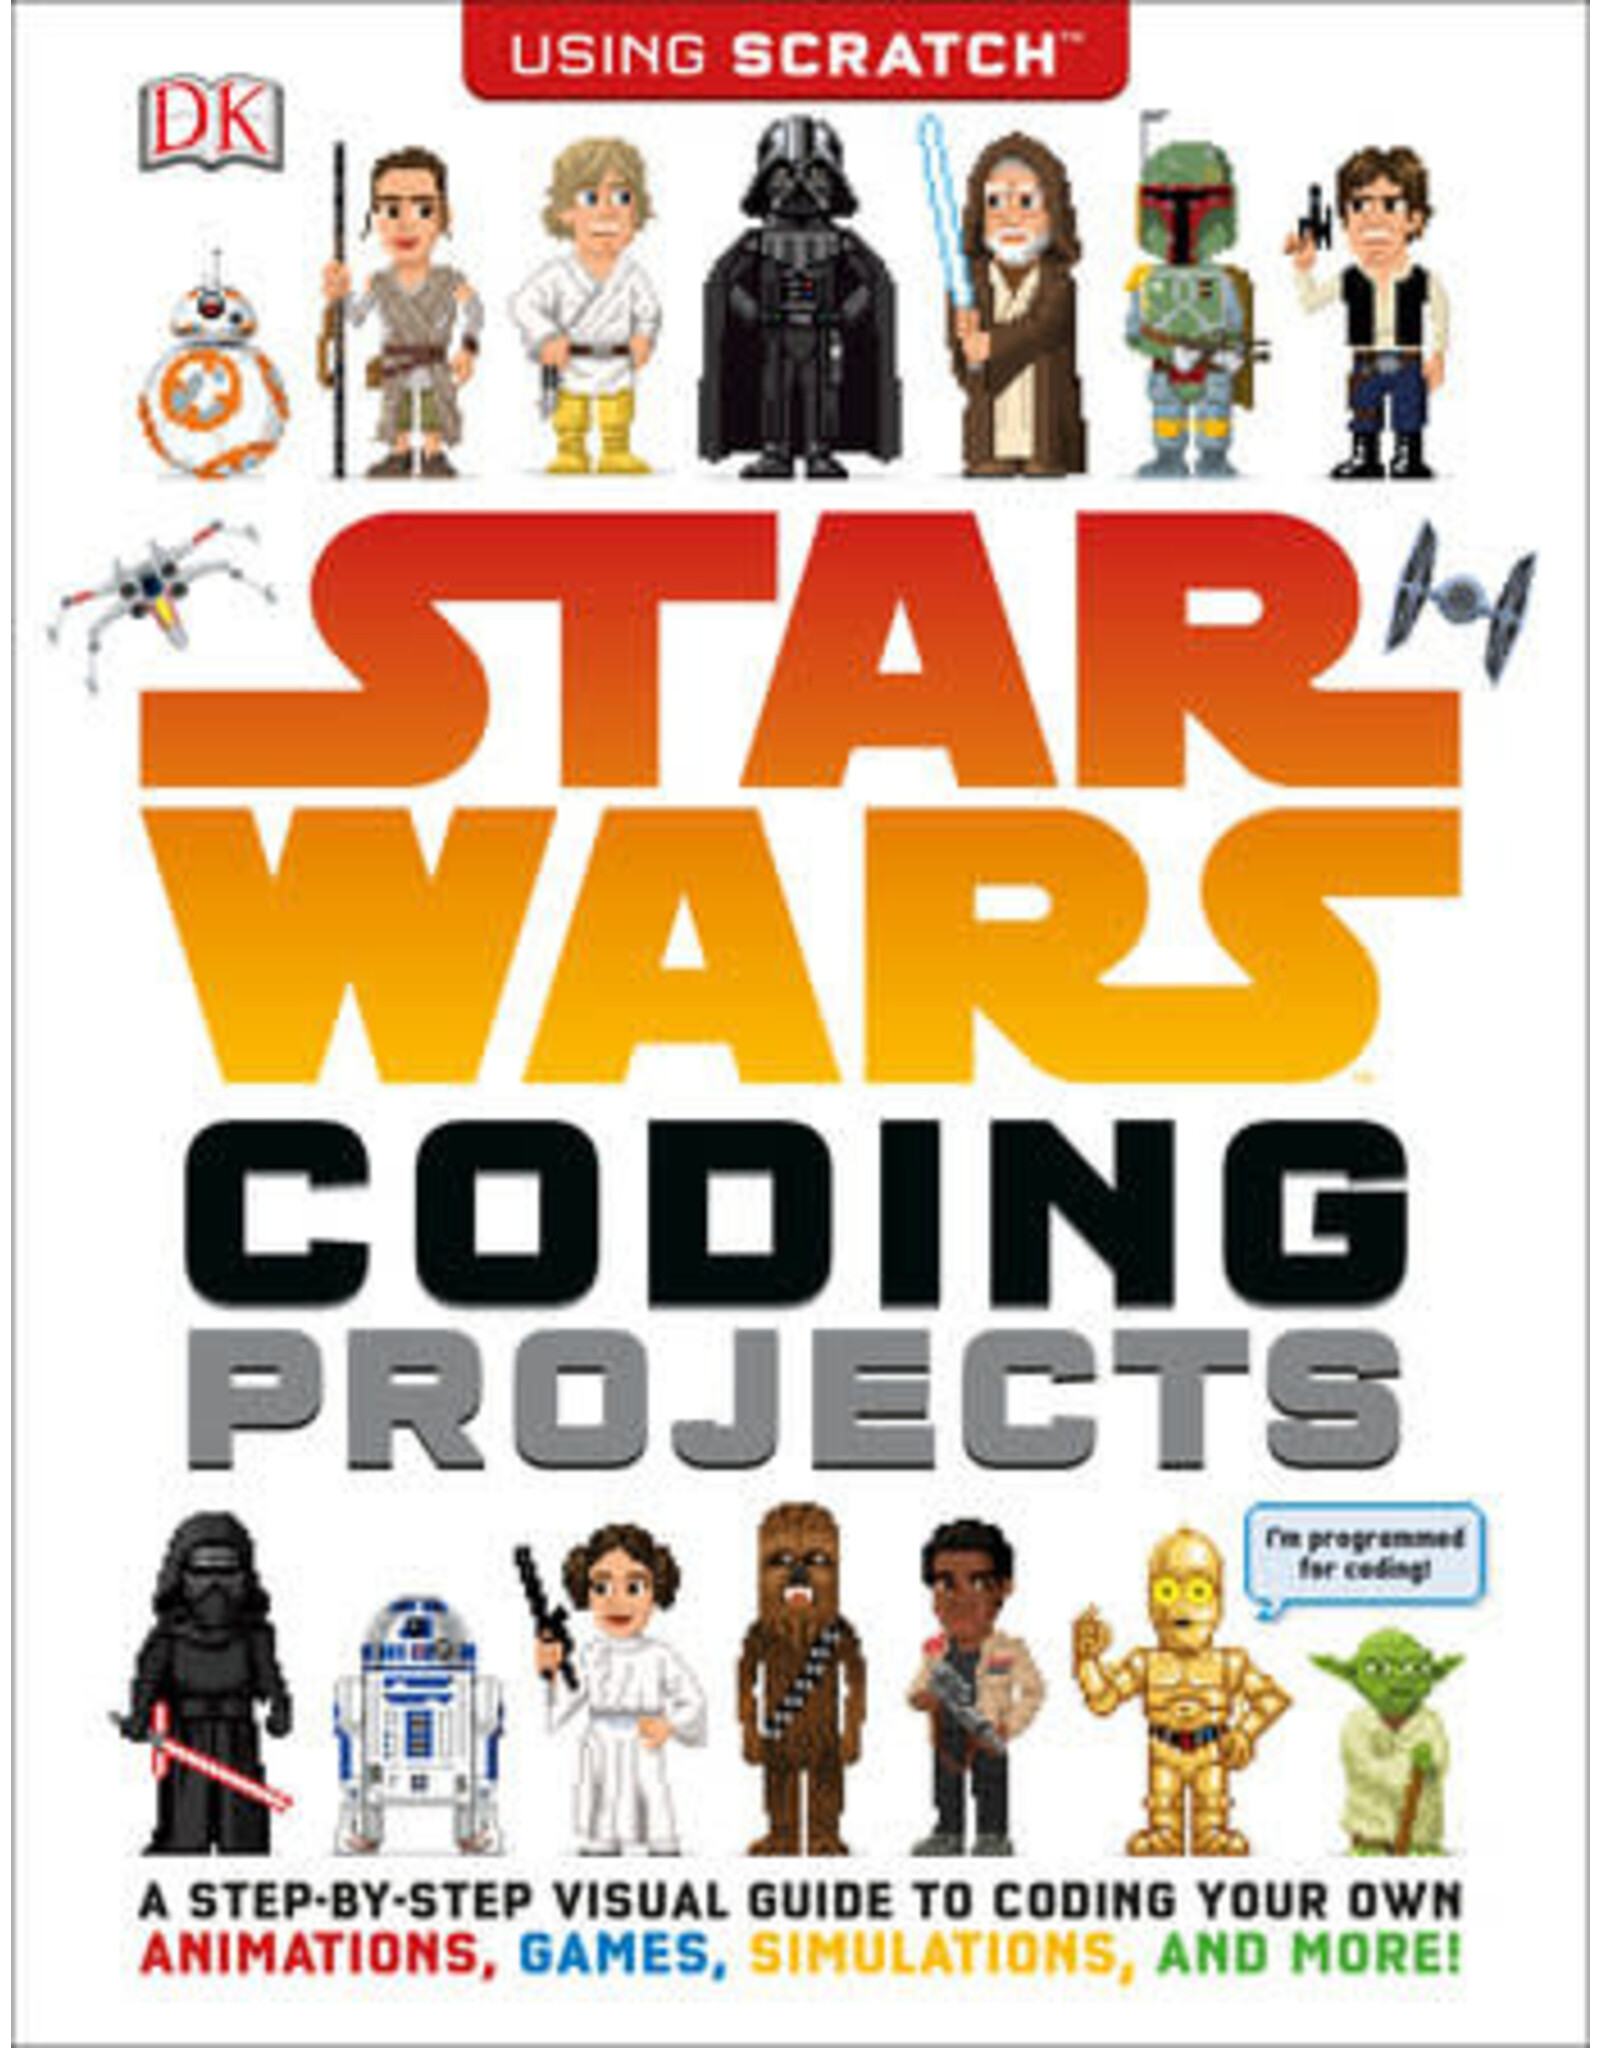 DK Star Wars Coding Projects